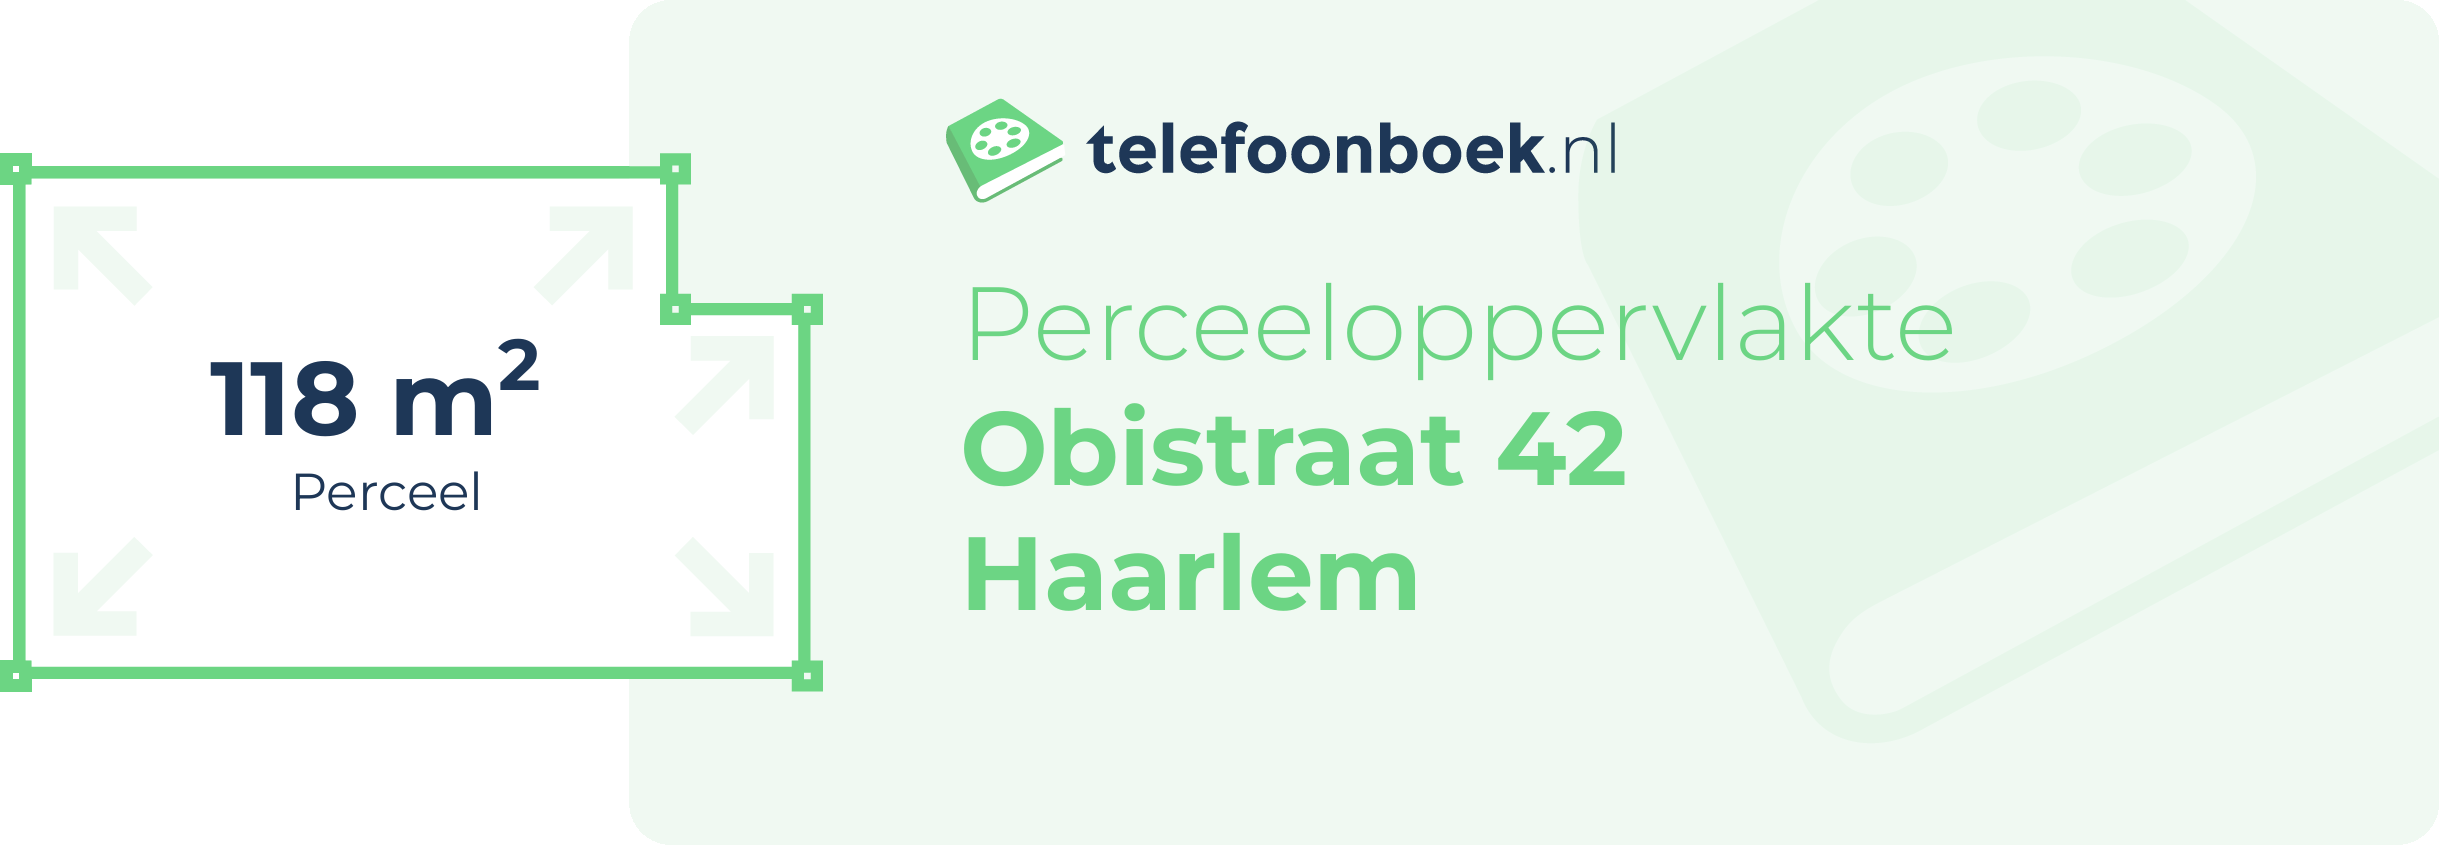 Perceeloppervlakte Obistraat 42 Haarlem